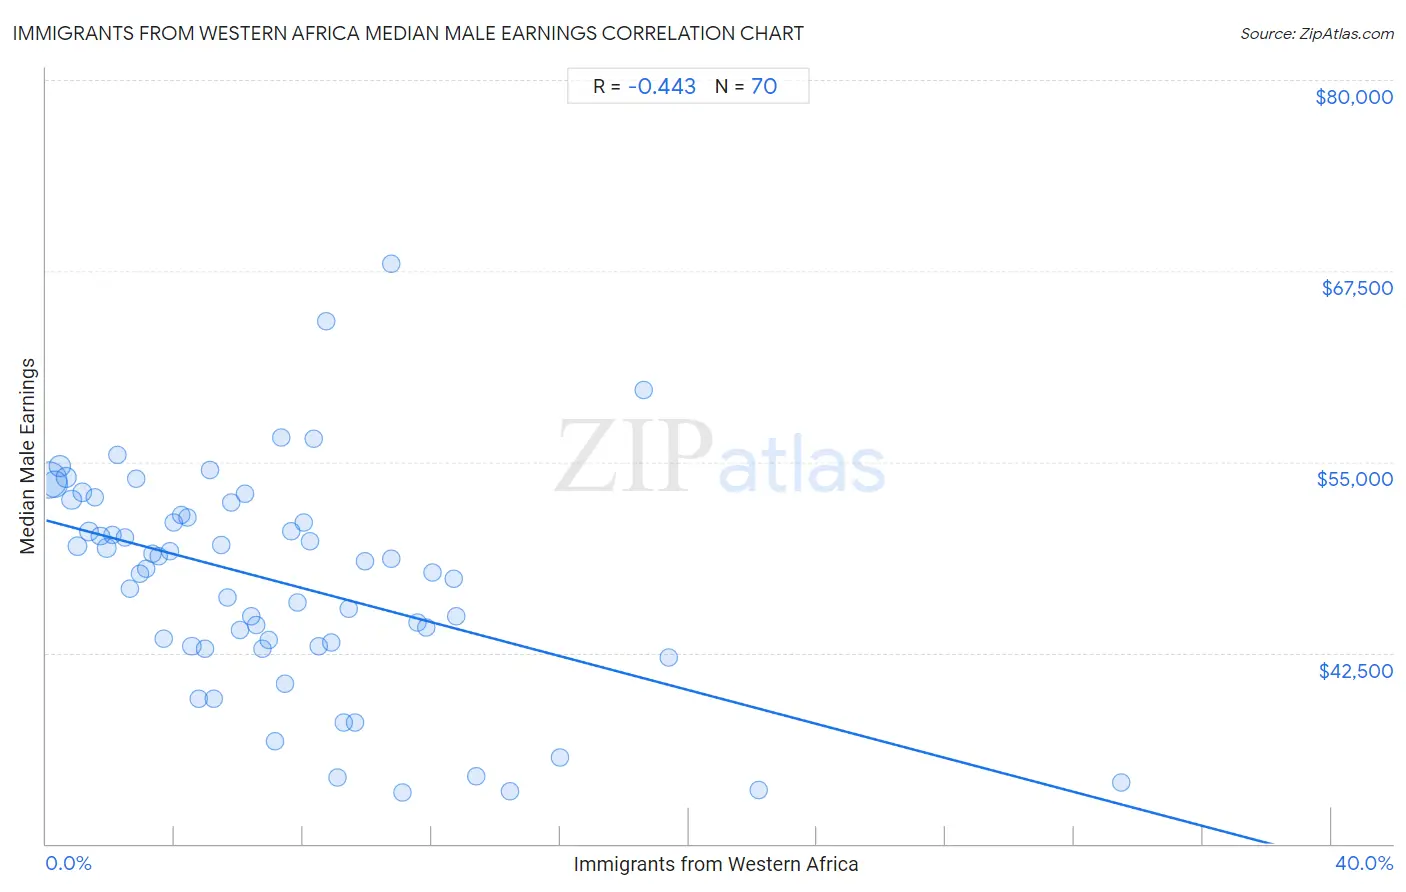 Immigrants from Western Africa Median Male Earnings